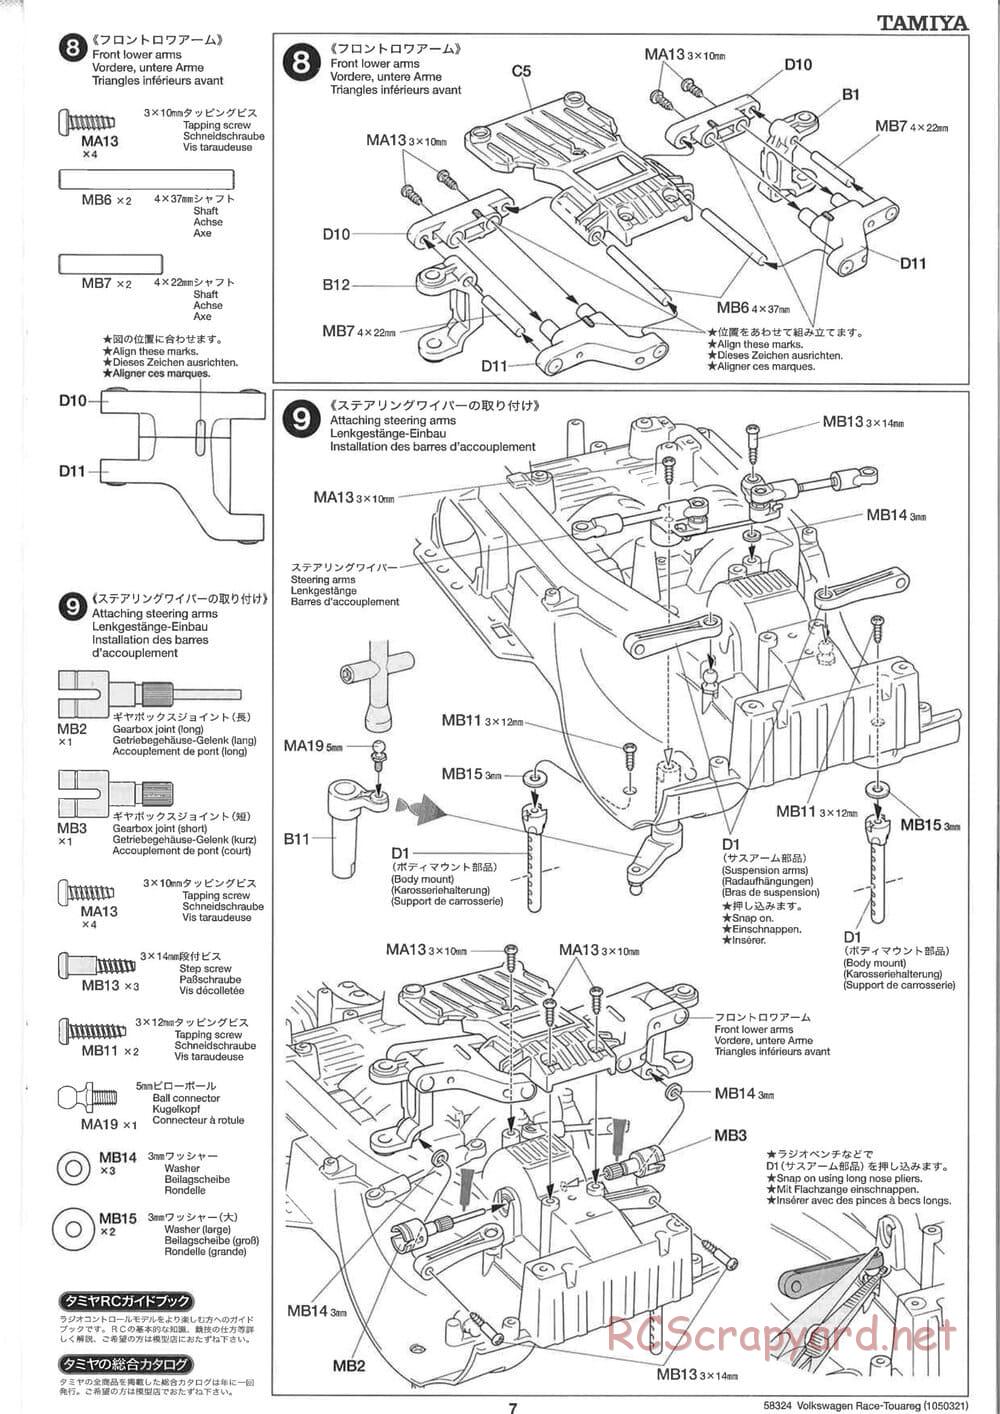 Tamiya - Volkswagen Race-Touareg - CC-01 Chassis - Manual - Page 7